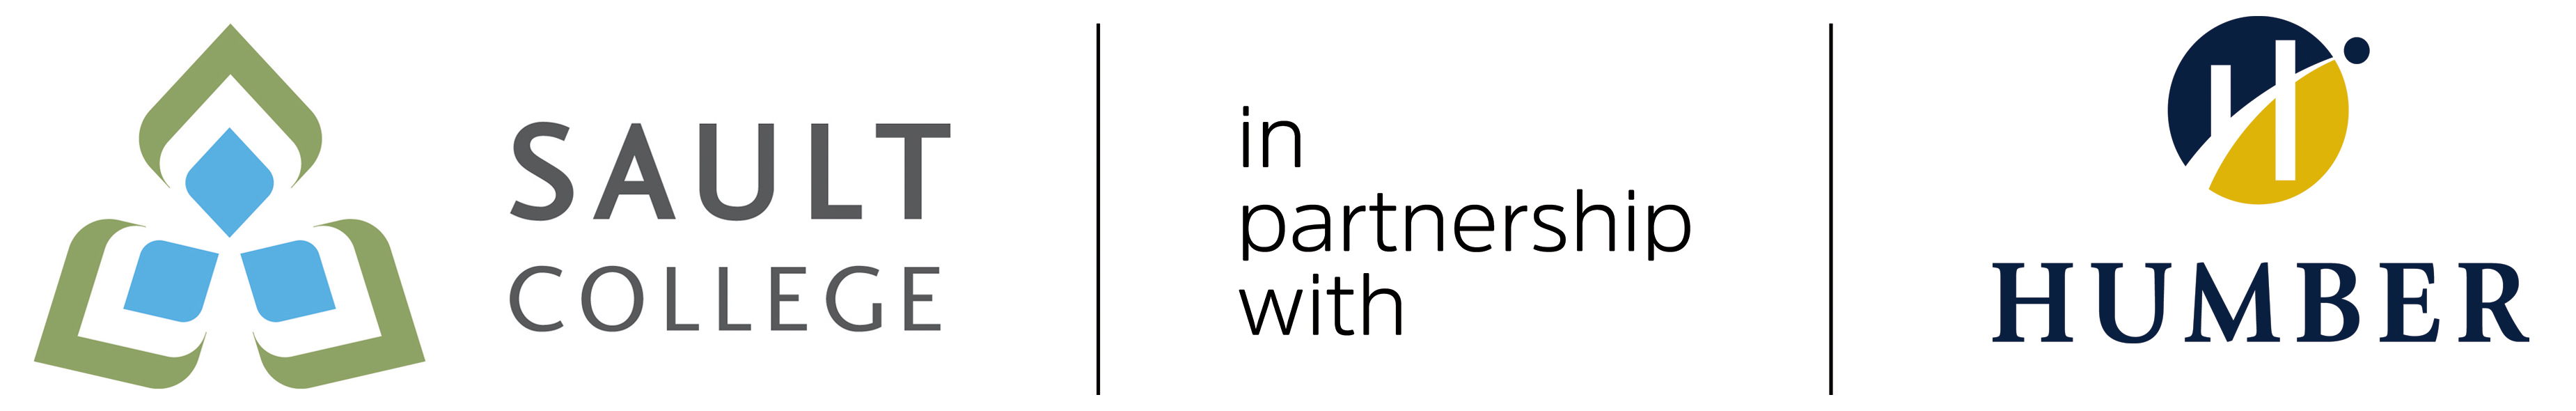 Humber partnership logo